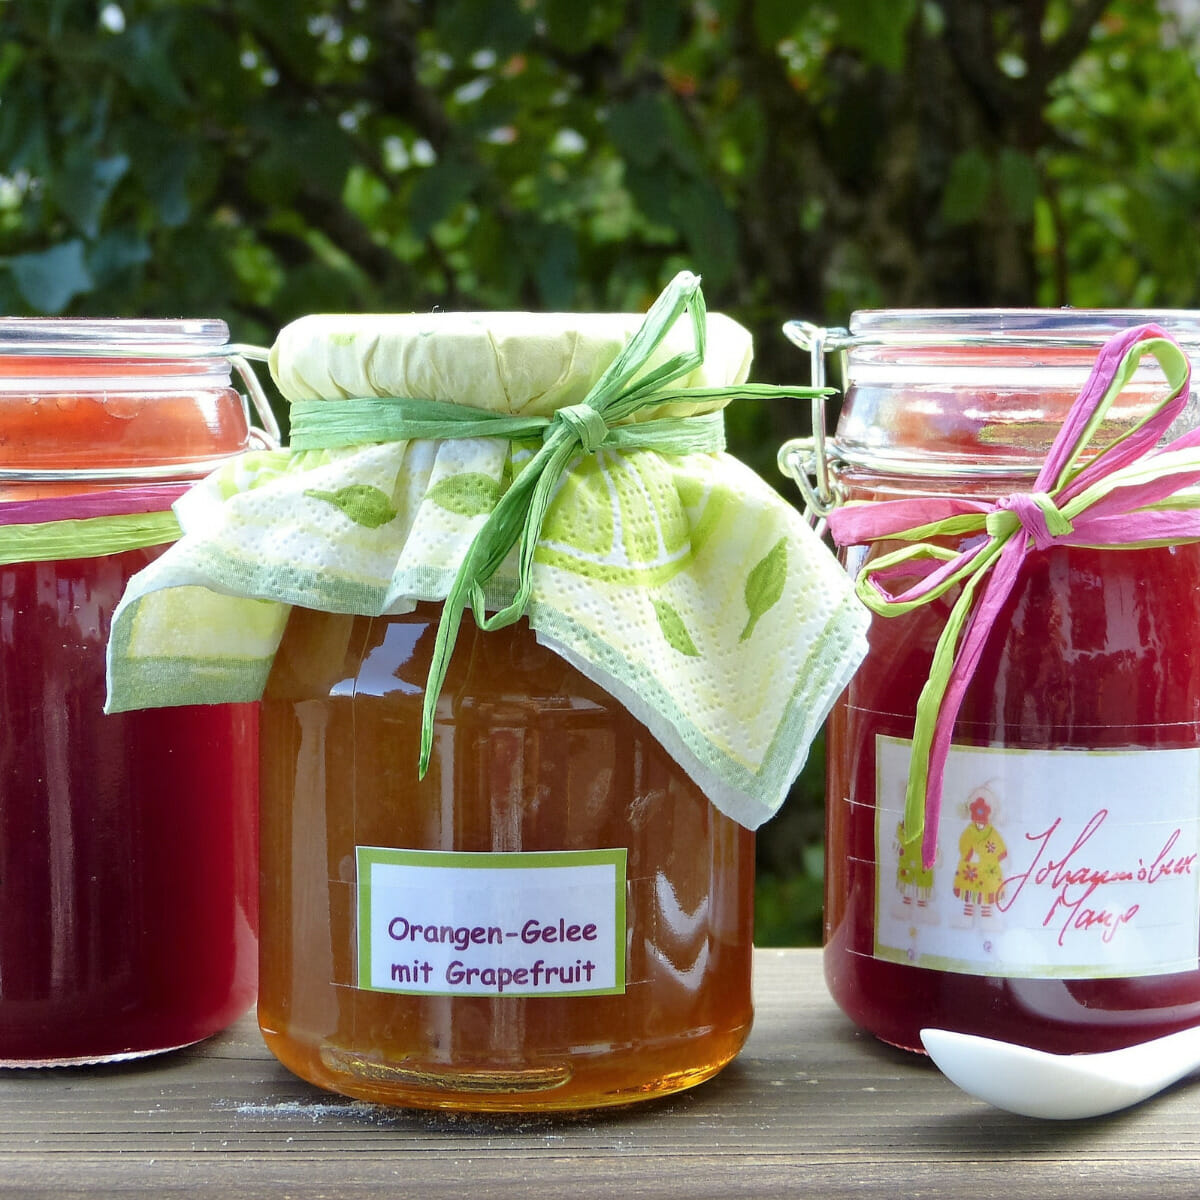 decorative labeled jars containing jams